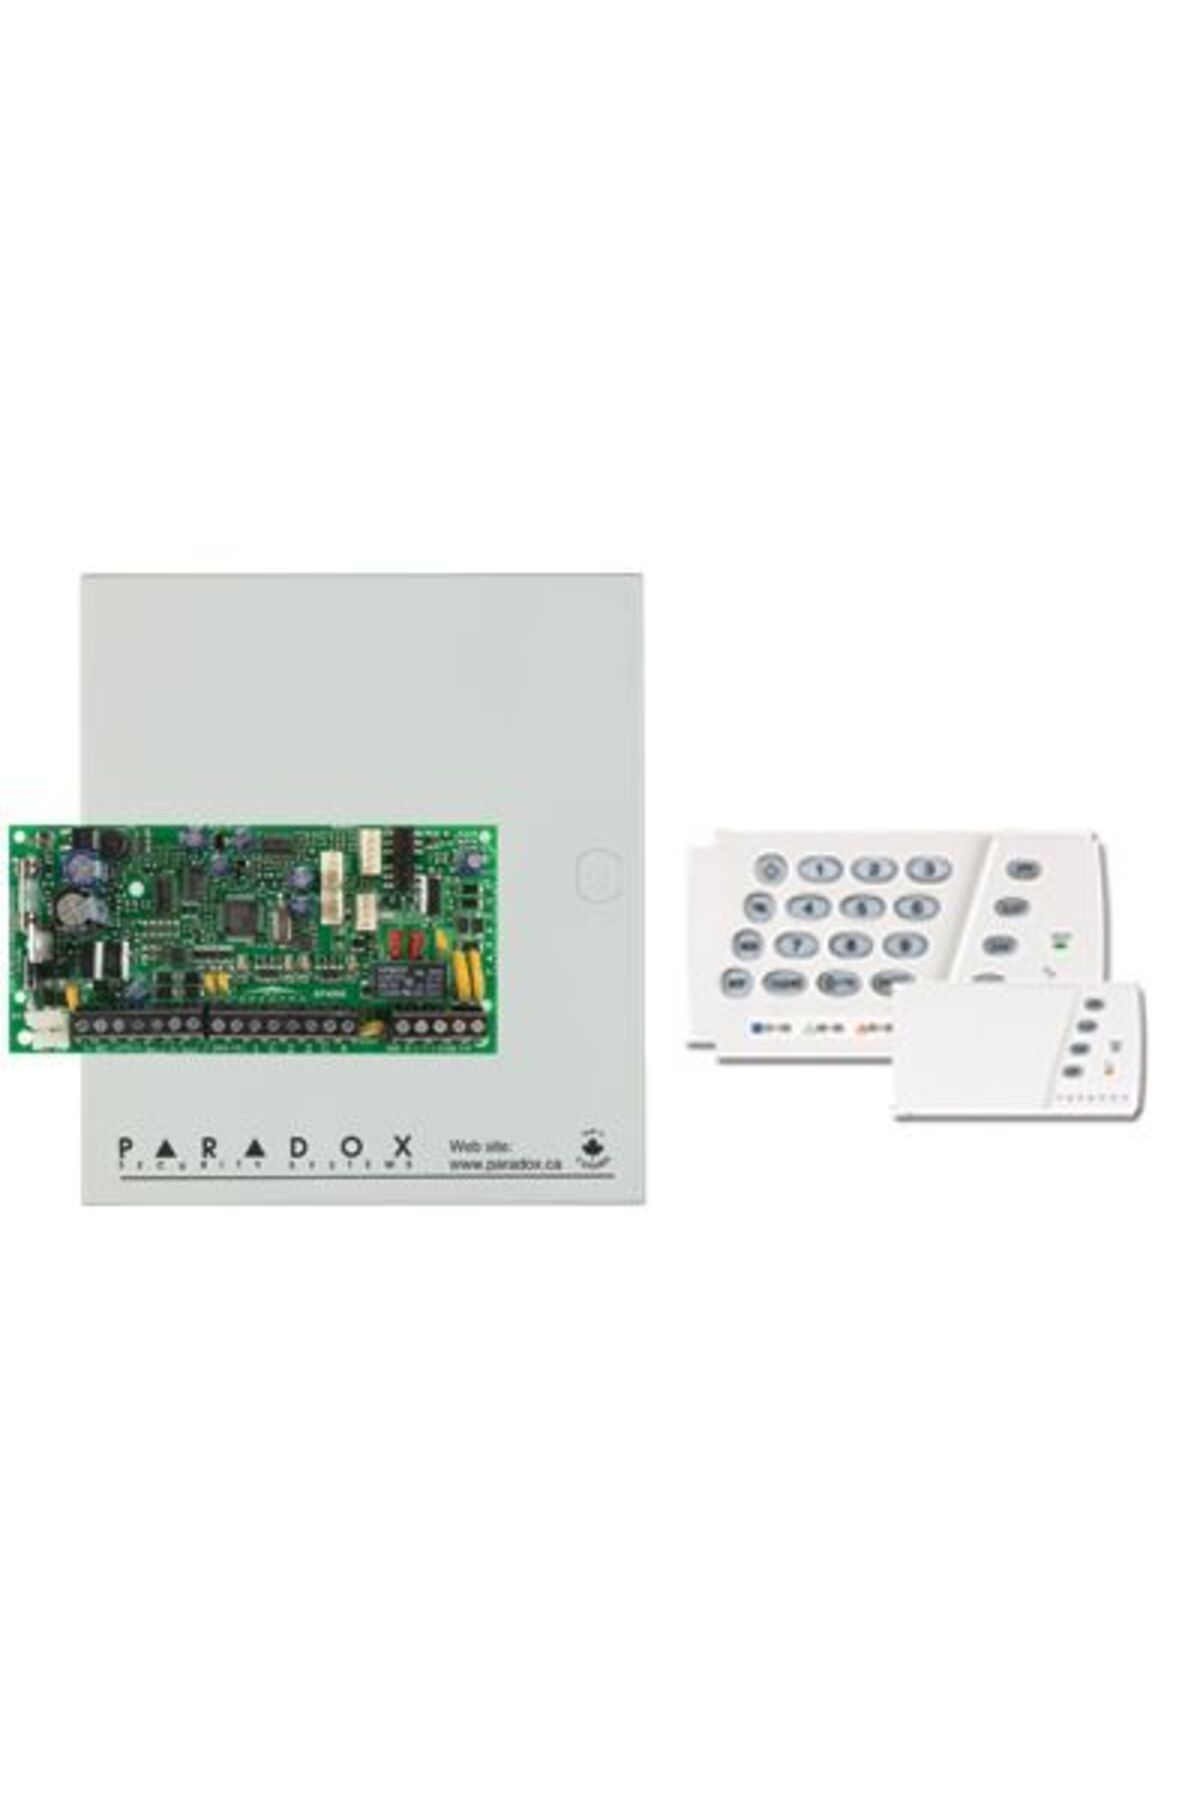 PARADOX SP-4000 8 Zone, 1 Pgm, 2 Kısım Kontrol Paneli + K636 Led keypad